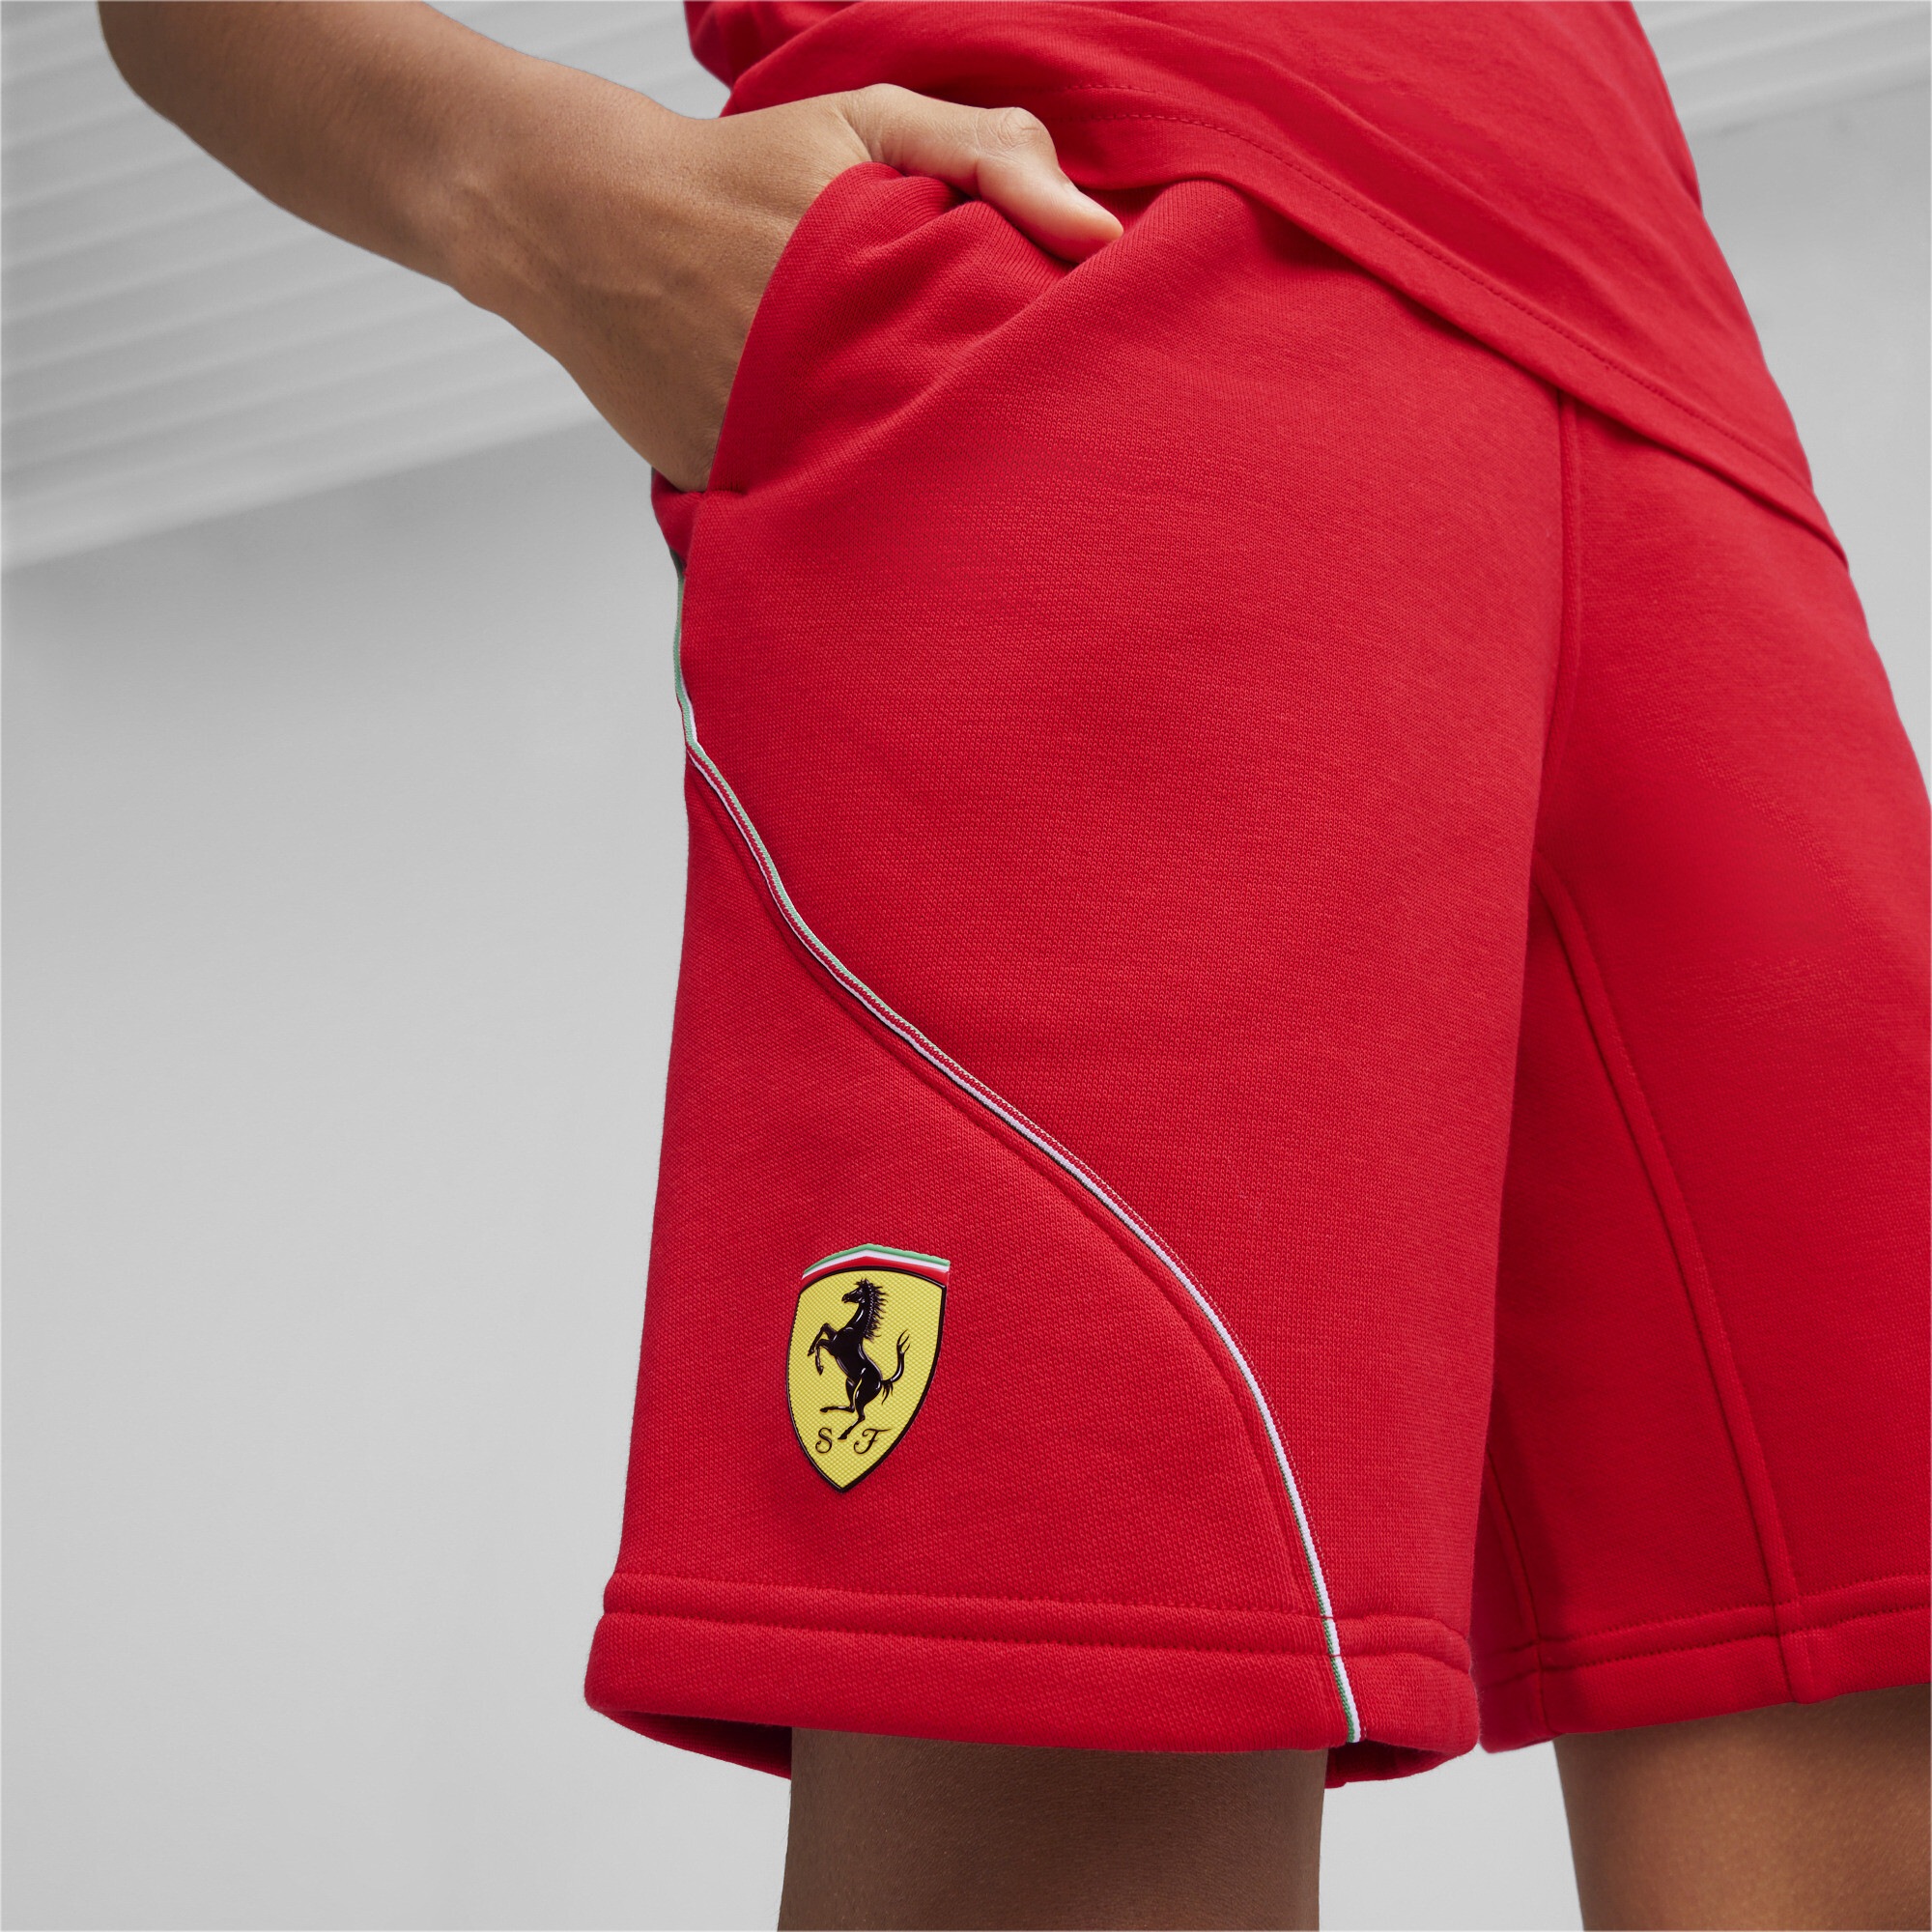 Ferrari Jugendliche« Sporthose Shorts »Scuderia | bestellen Race Motorsport PUMA BAUR